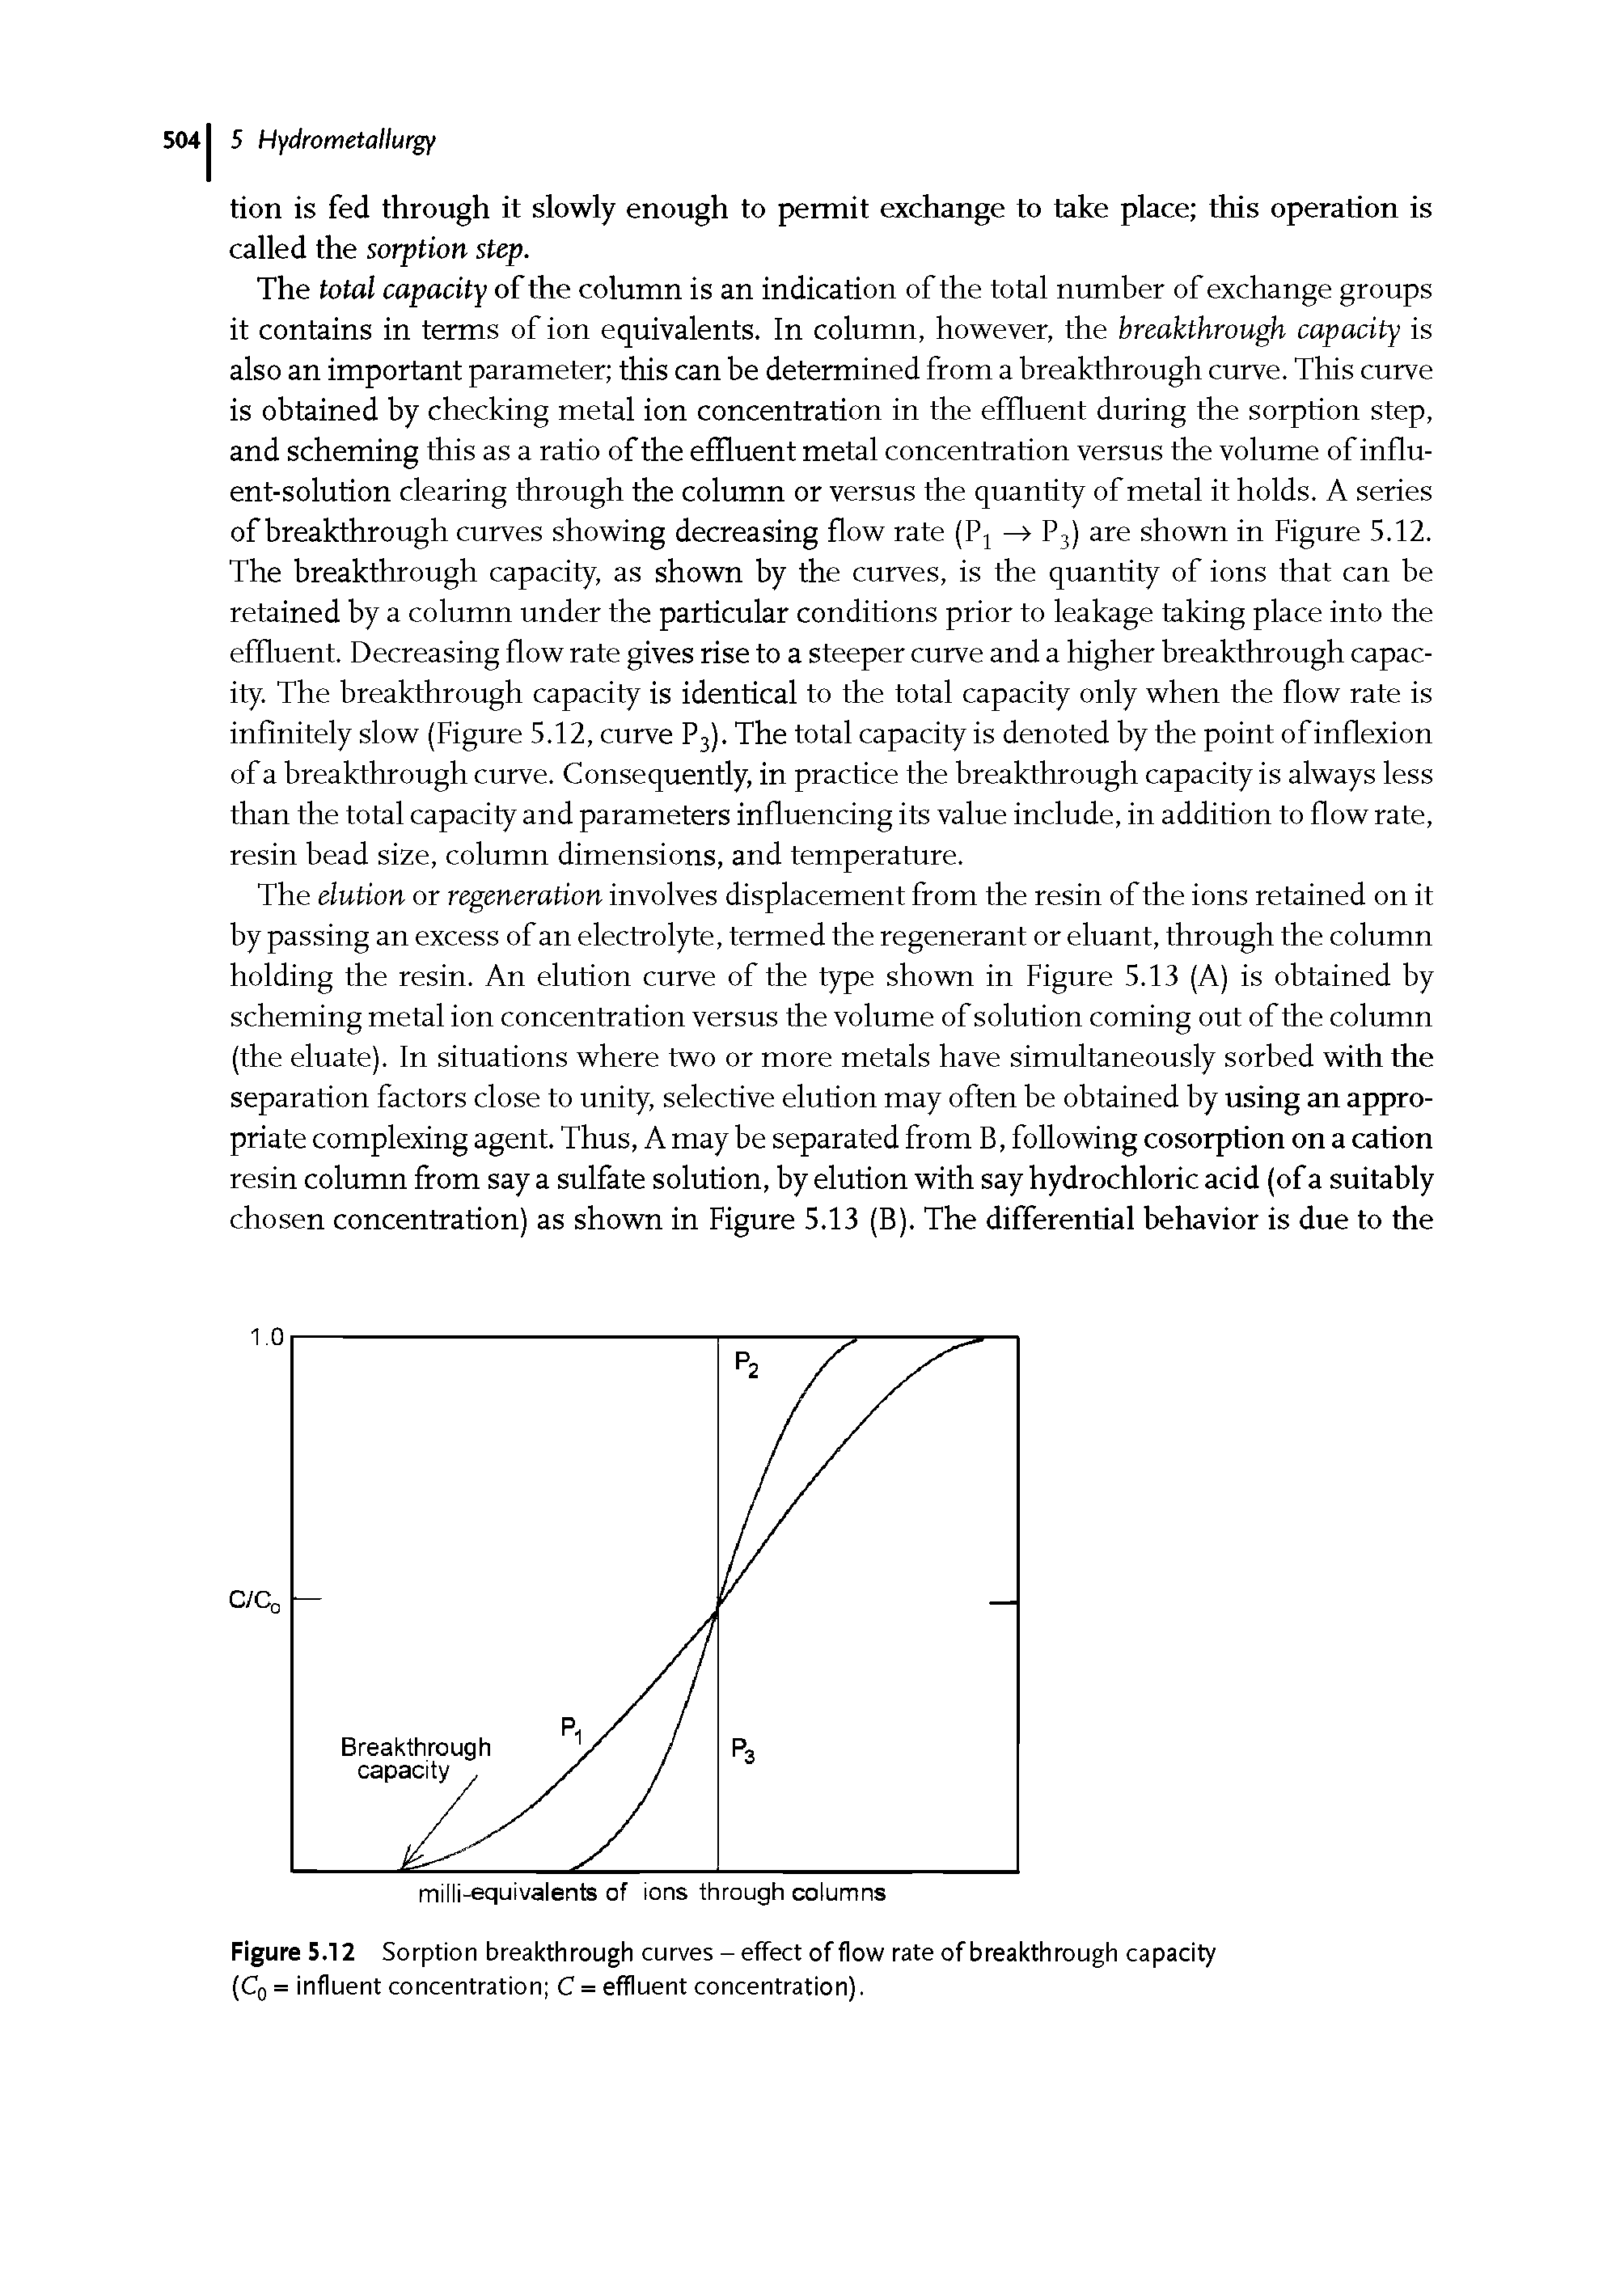 Figure 5.12 Sorption breakthrough curves - effect of flow rate of breakthrough capacity (C0 = influent concentration C = effluent concentration).